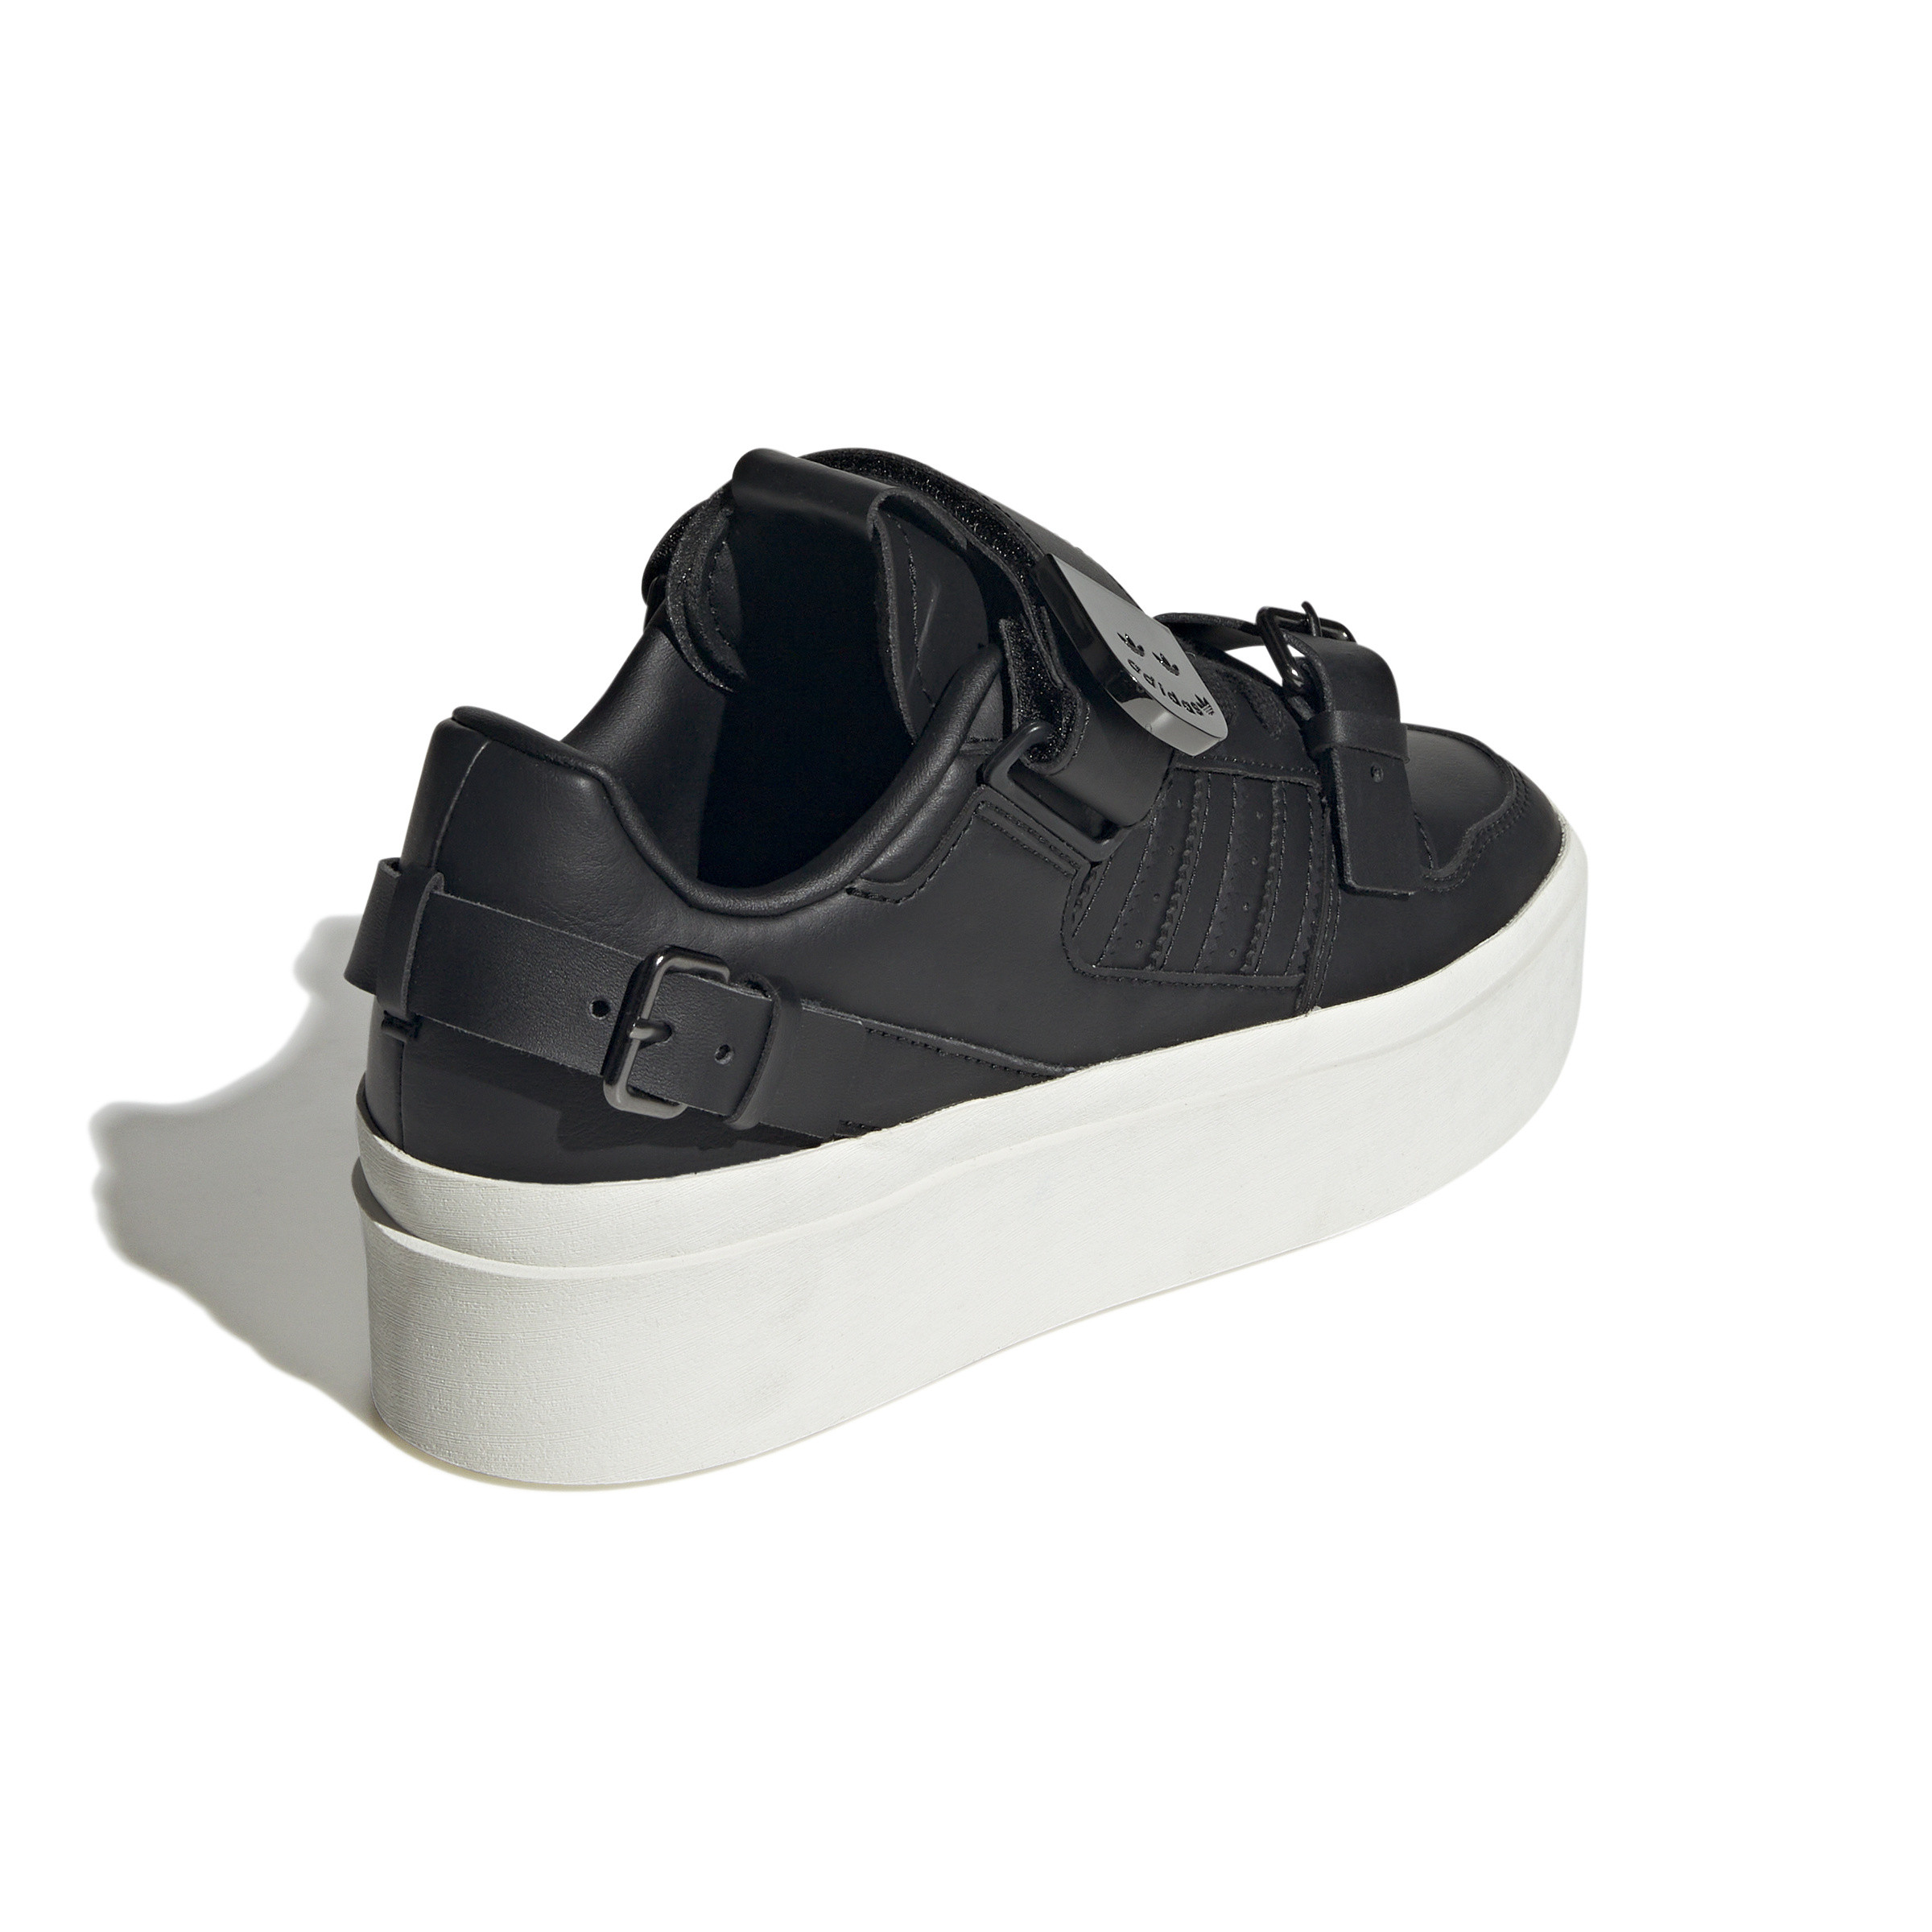 Adidas - Forum Bonega shoes, Black, large image number 3